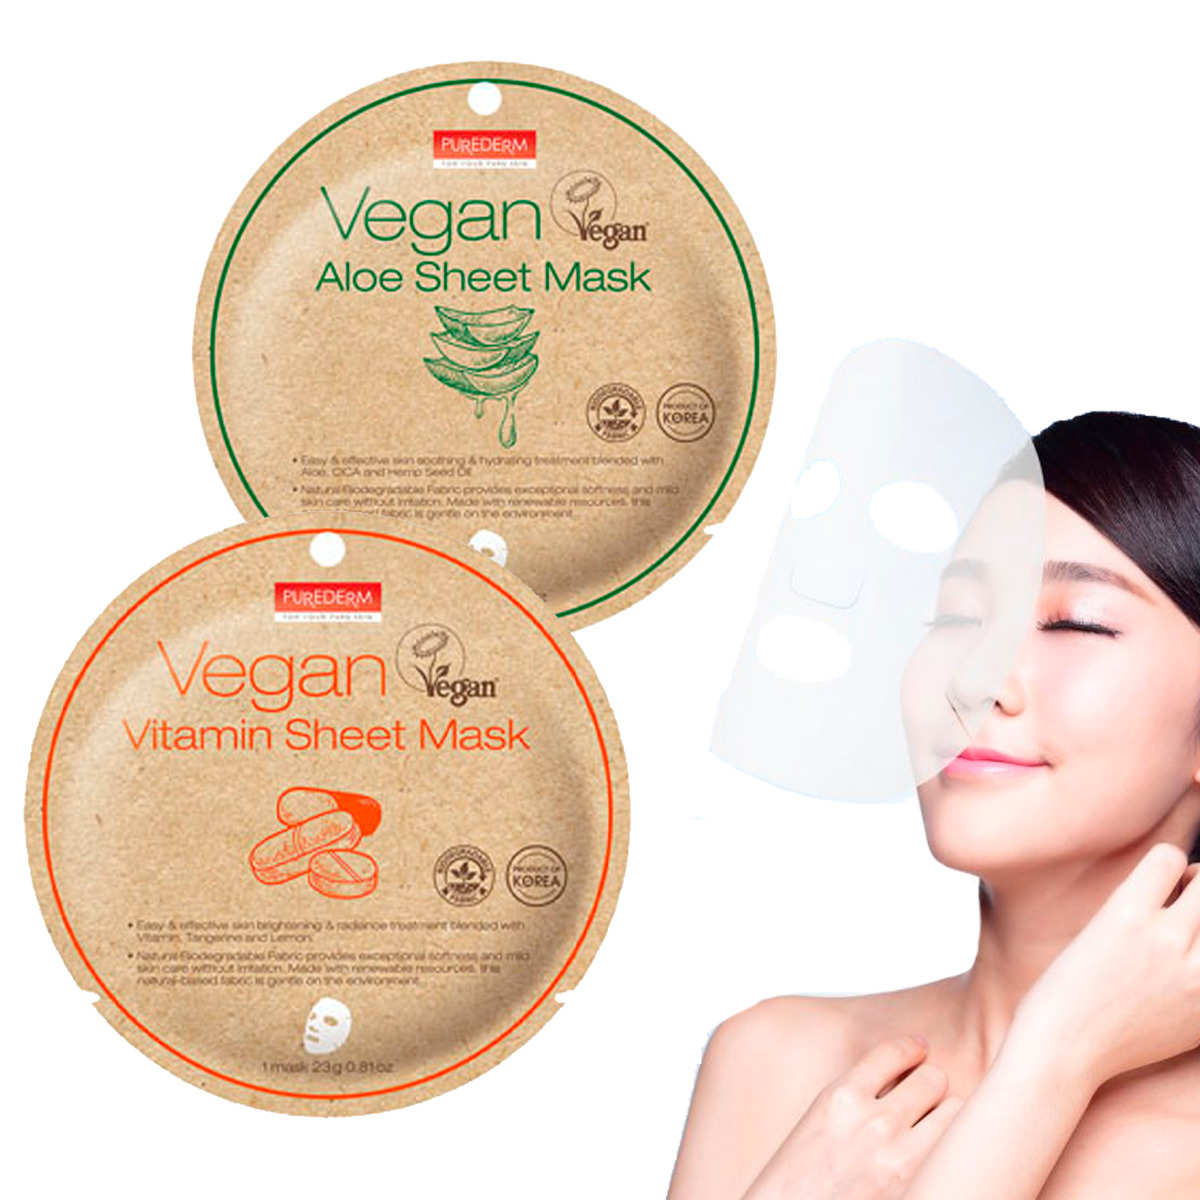 2 Mascarilla Purederm Vegana Vitamina- Aloe Producto Coreano